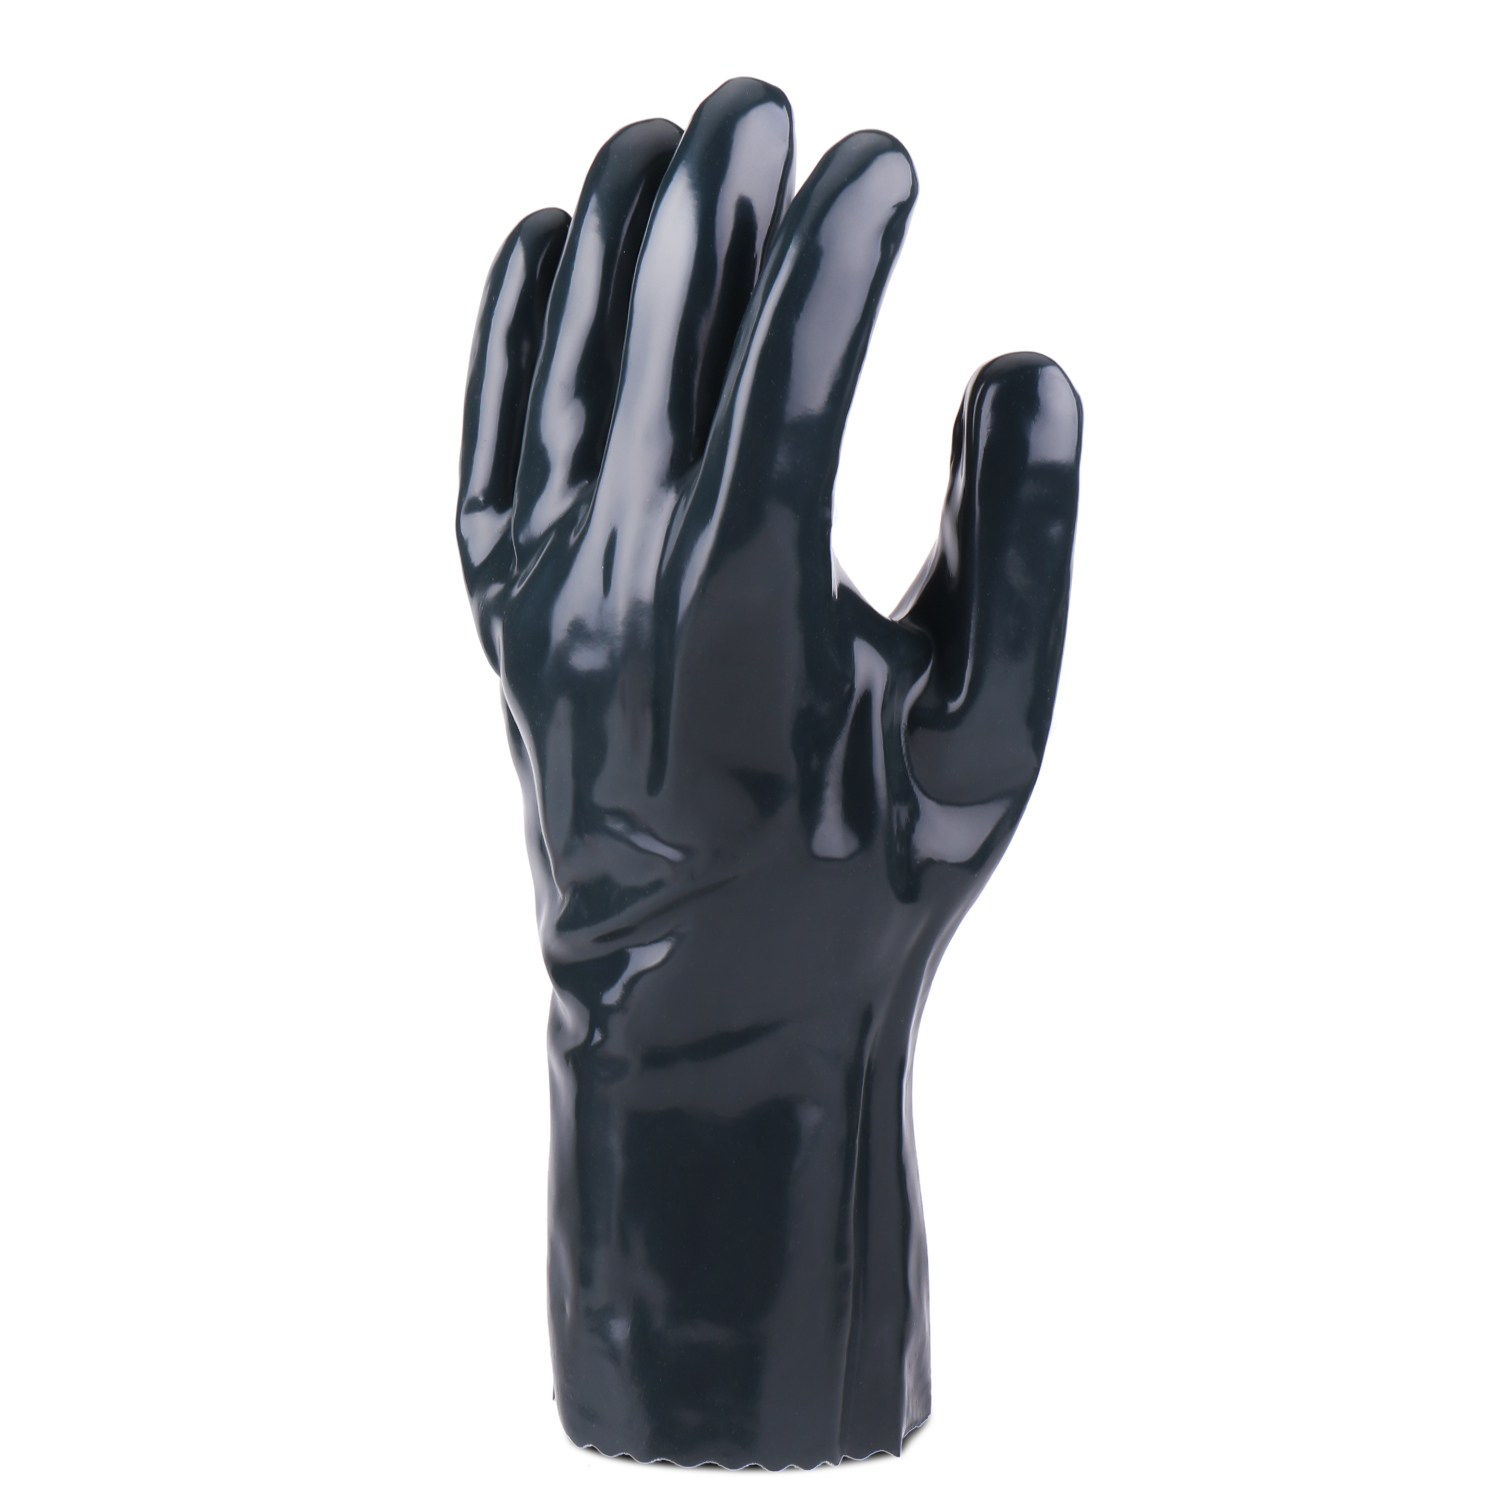 rubber bbq gloves